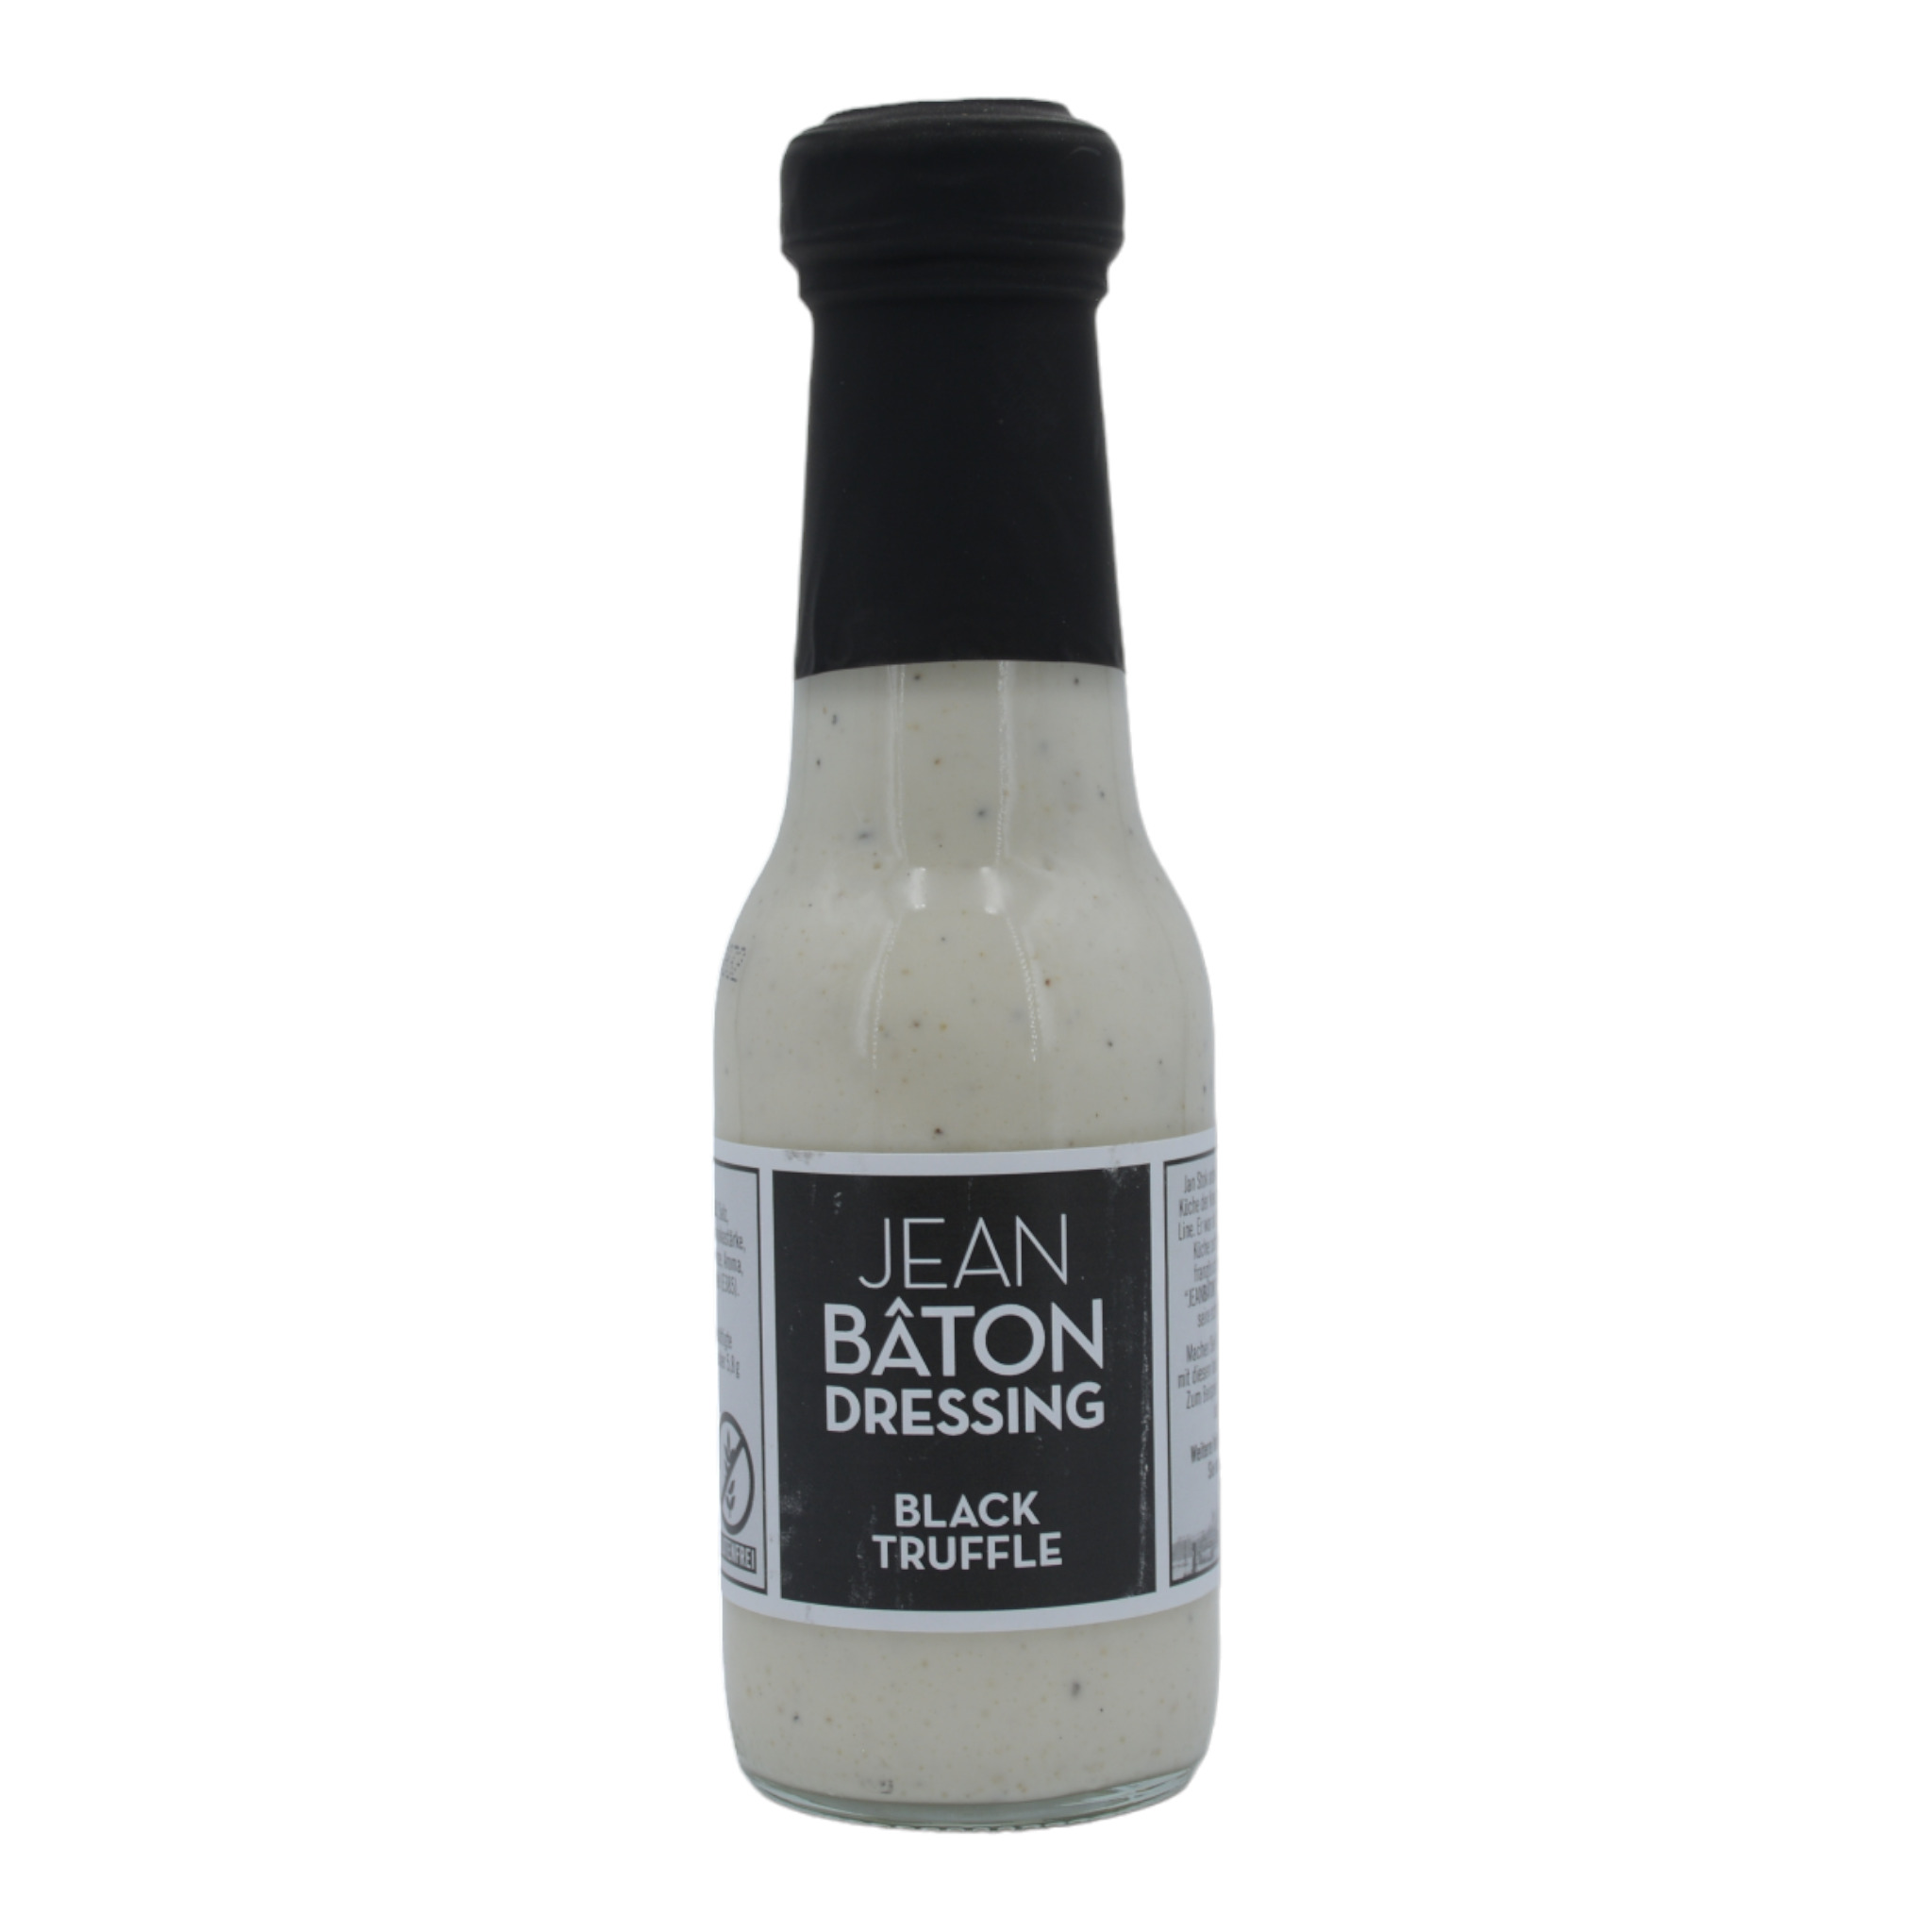 8718403015195 - Jean Baton Dressing Black Truffle f